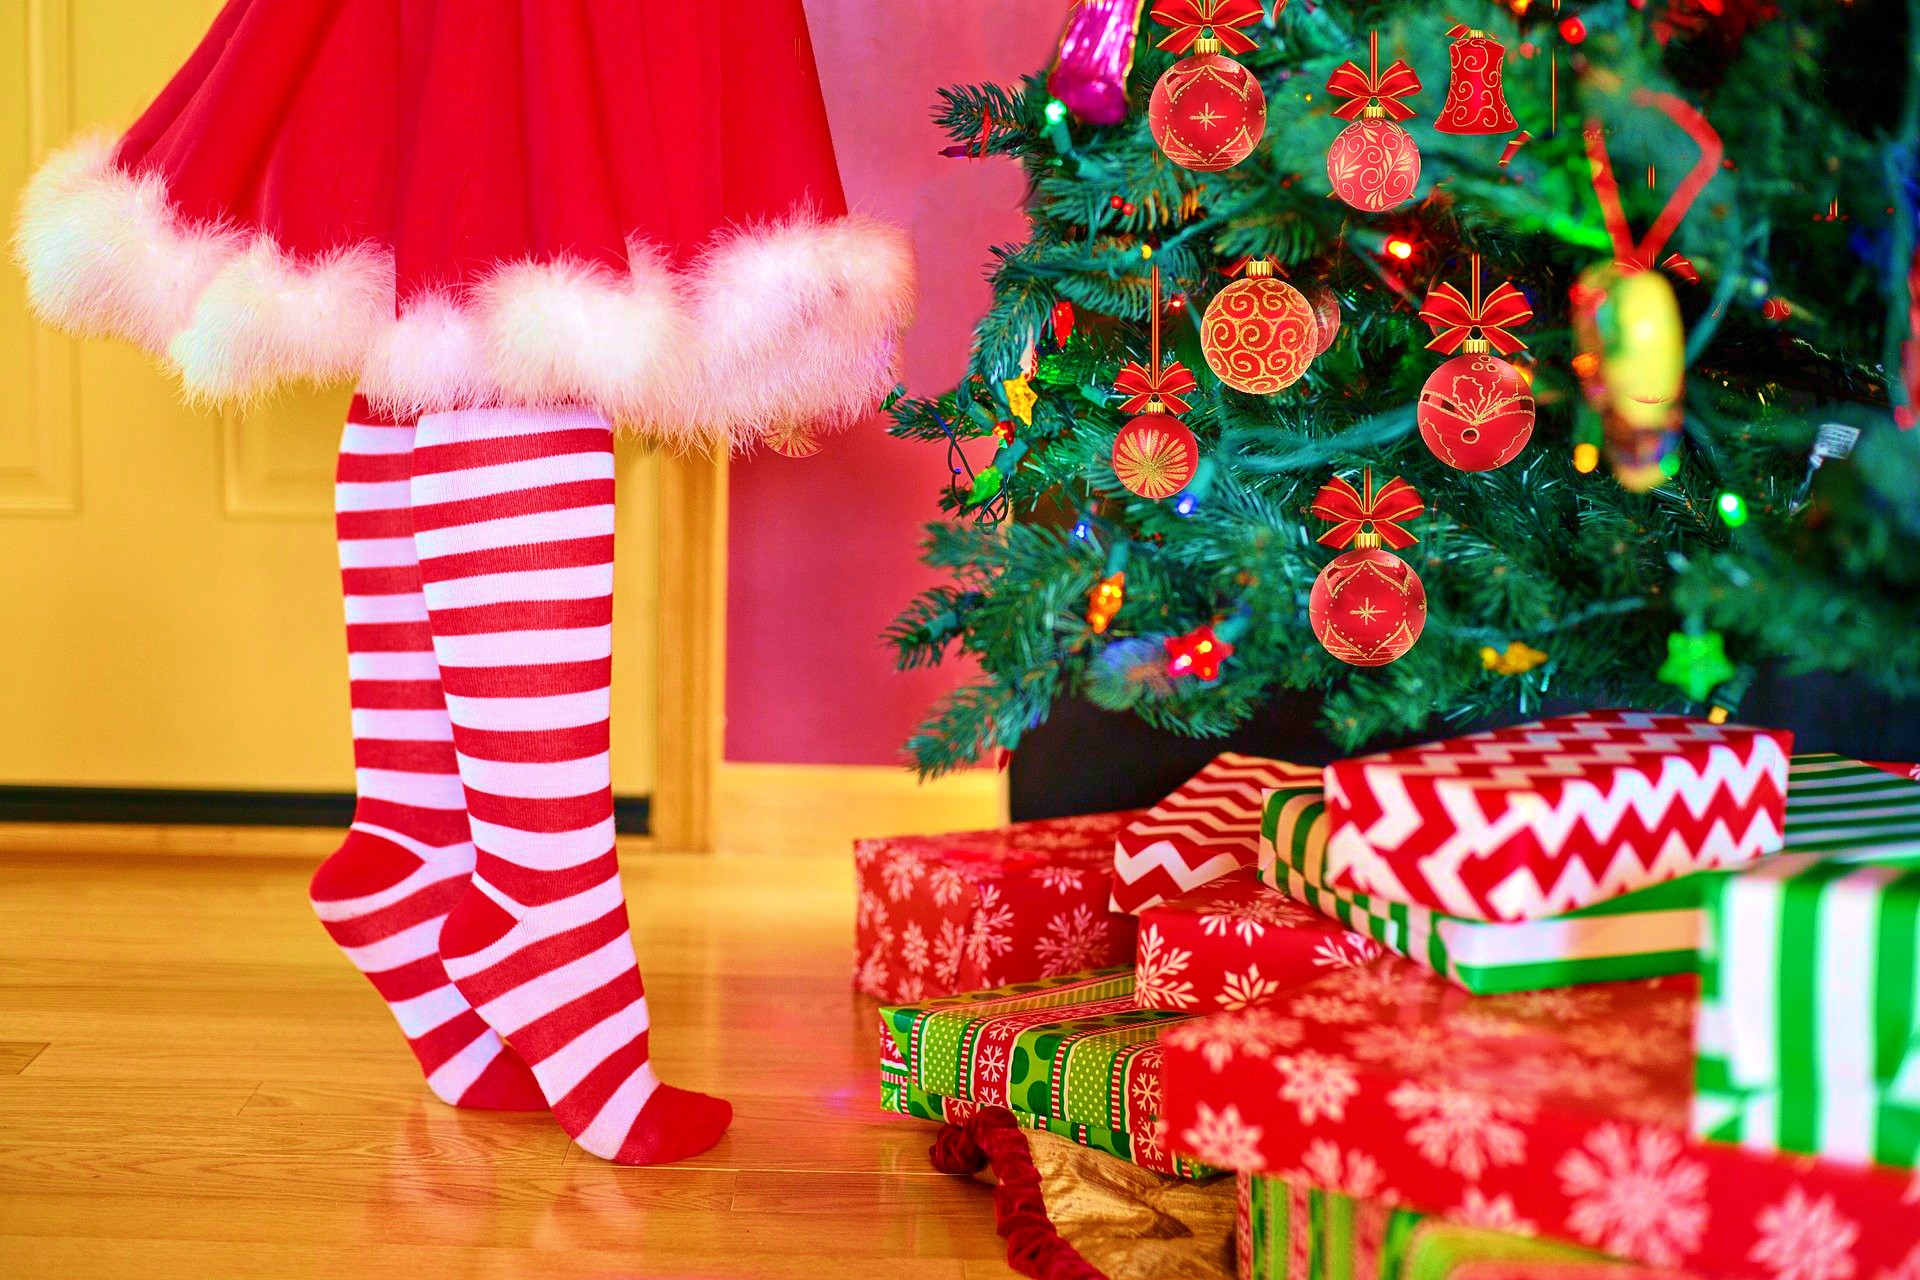 <img src="santa.jpg" alt="mini santa's helper with presents"/> 